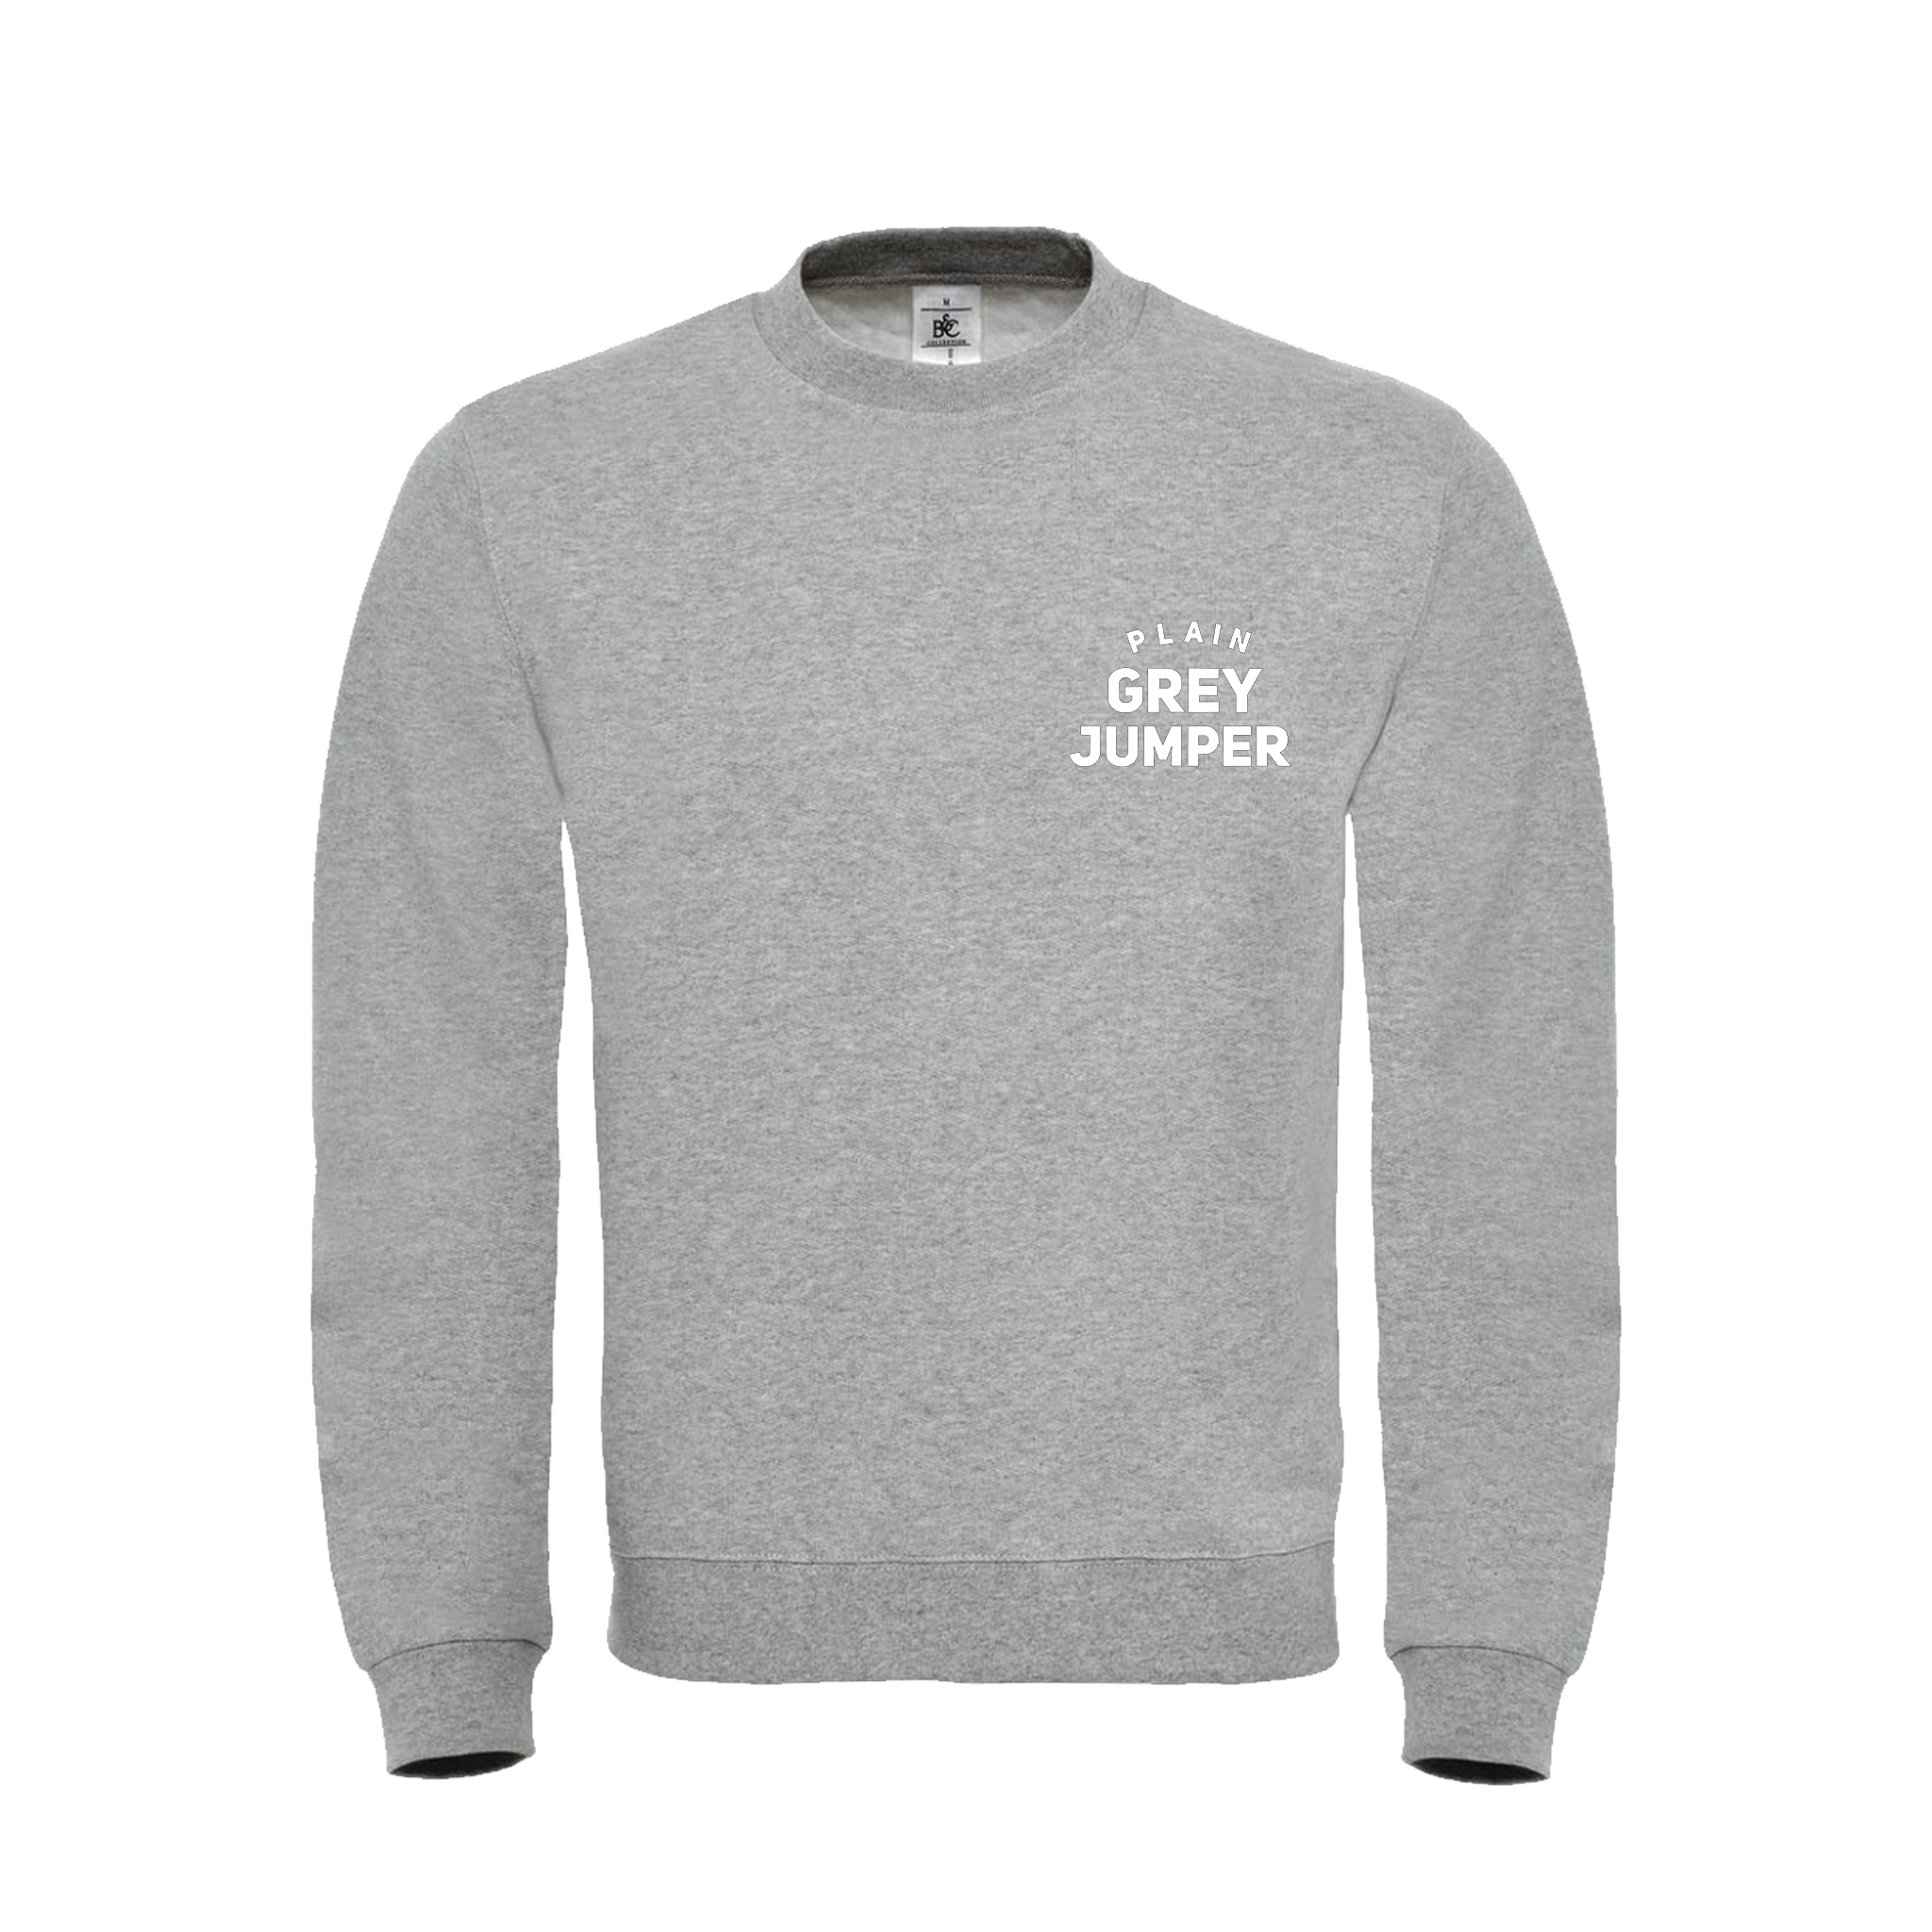 plain grey jumper, plain apparel, grey jumper, streetwear, plain apparel, the plain shop, pre-brushed jumper, crewneck sweatshirt